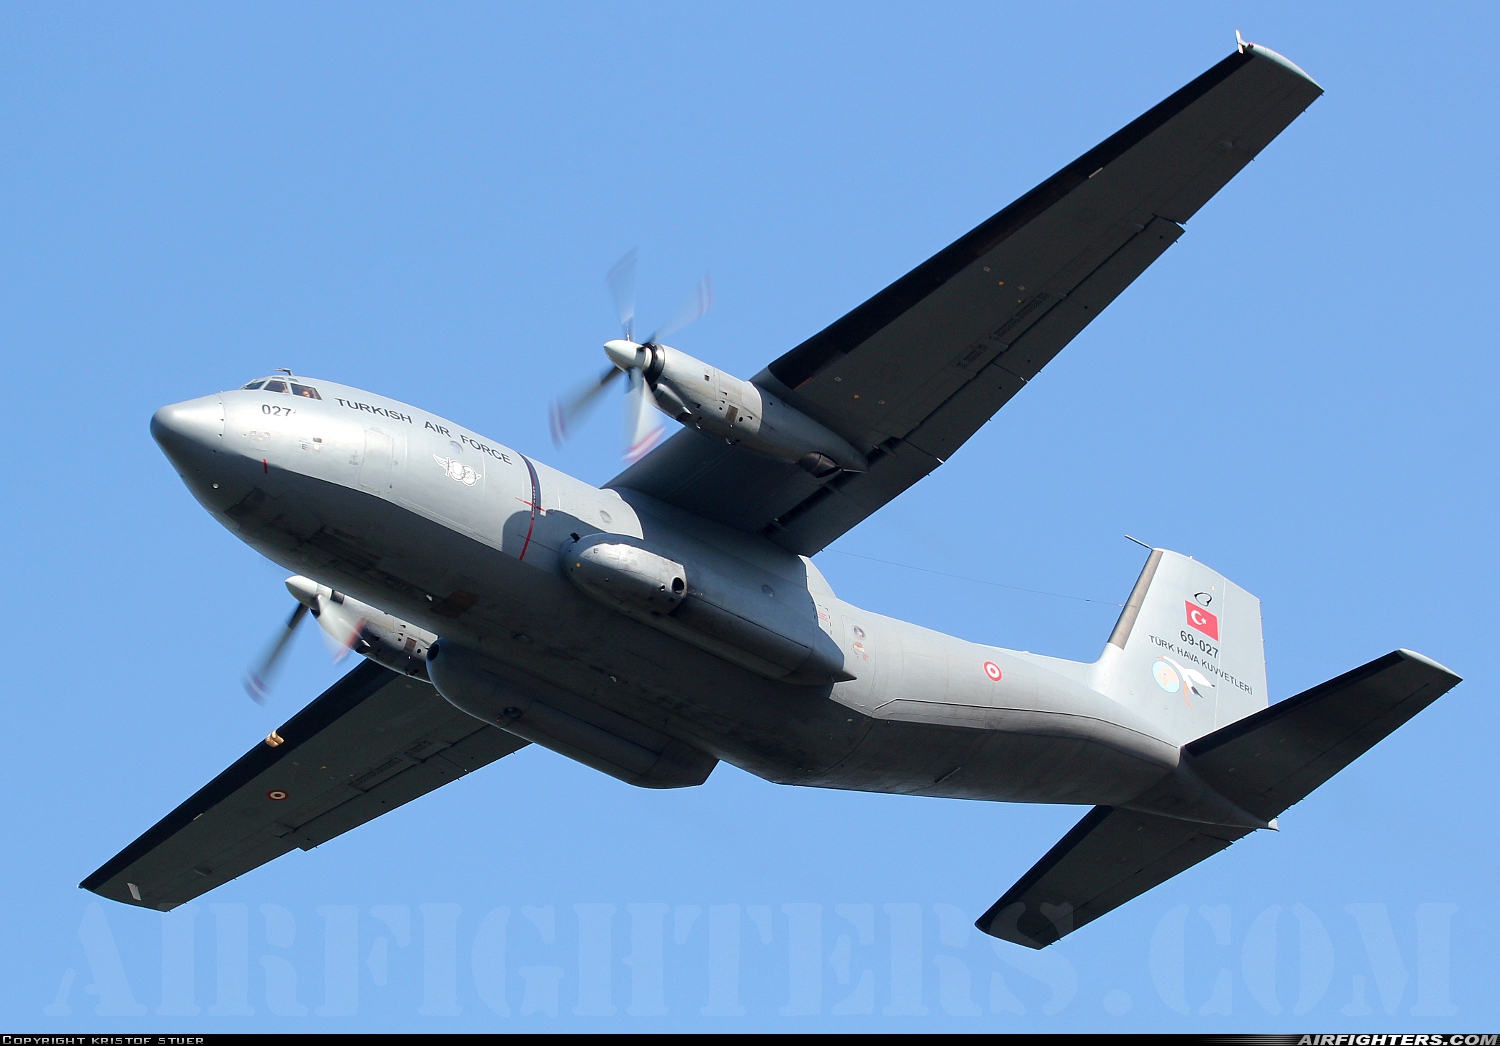 Türkiye - Air Force Transport Allianz C-160D 69-027 at Kleine Brogel (EBBL), Belgium